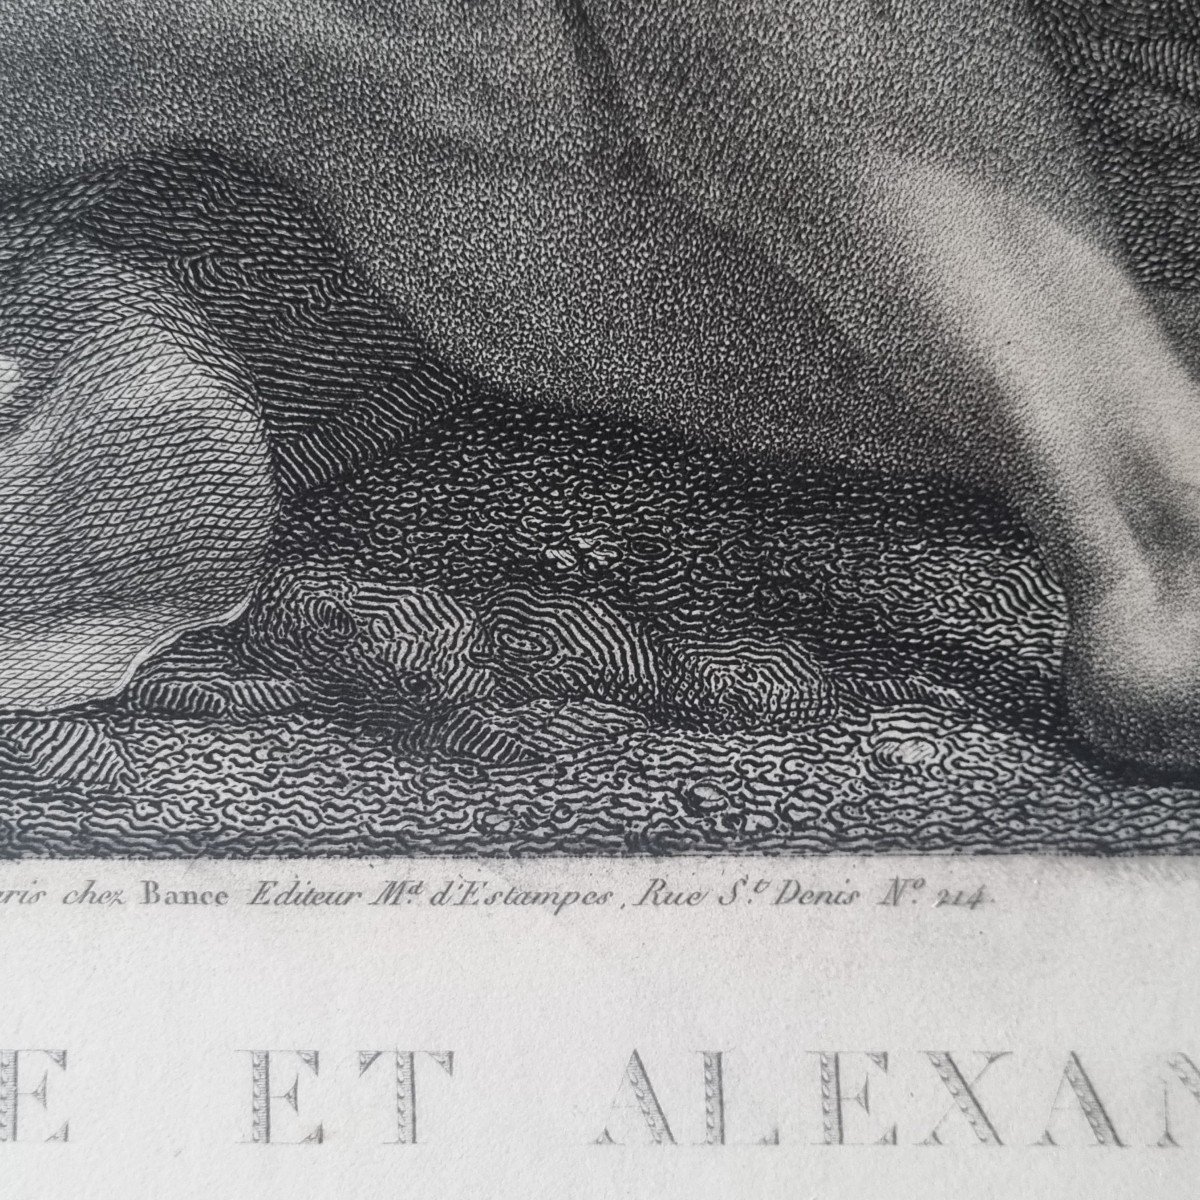 MAURO GANDOLFI - LA RENCONTRE DE DIOGENE ET ALEXANDRE GRANDE GRAVURE DE 1802-photo-8